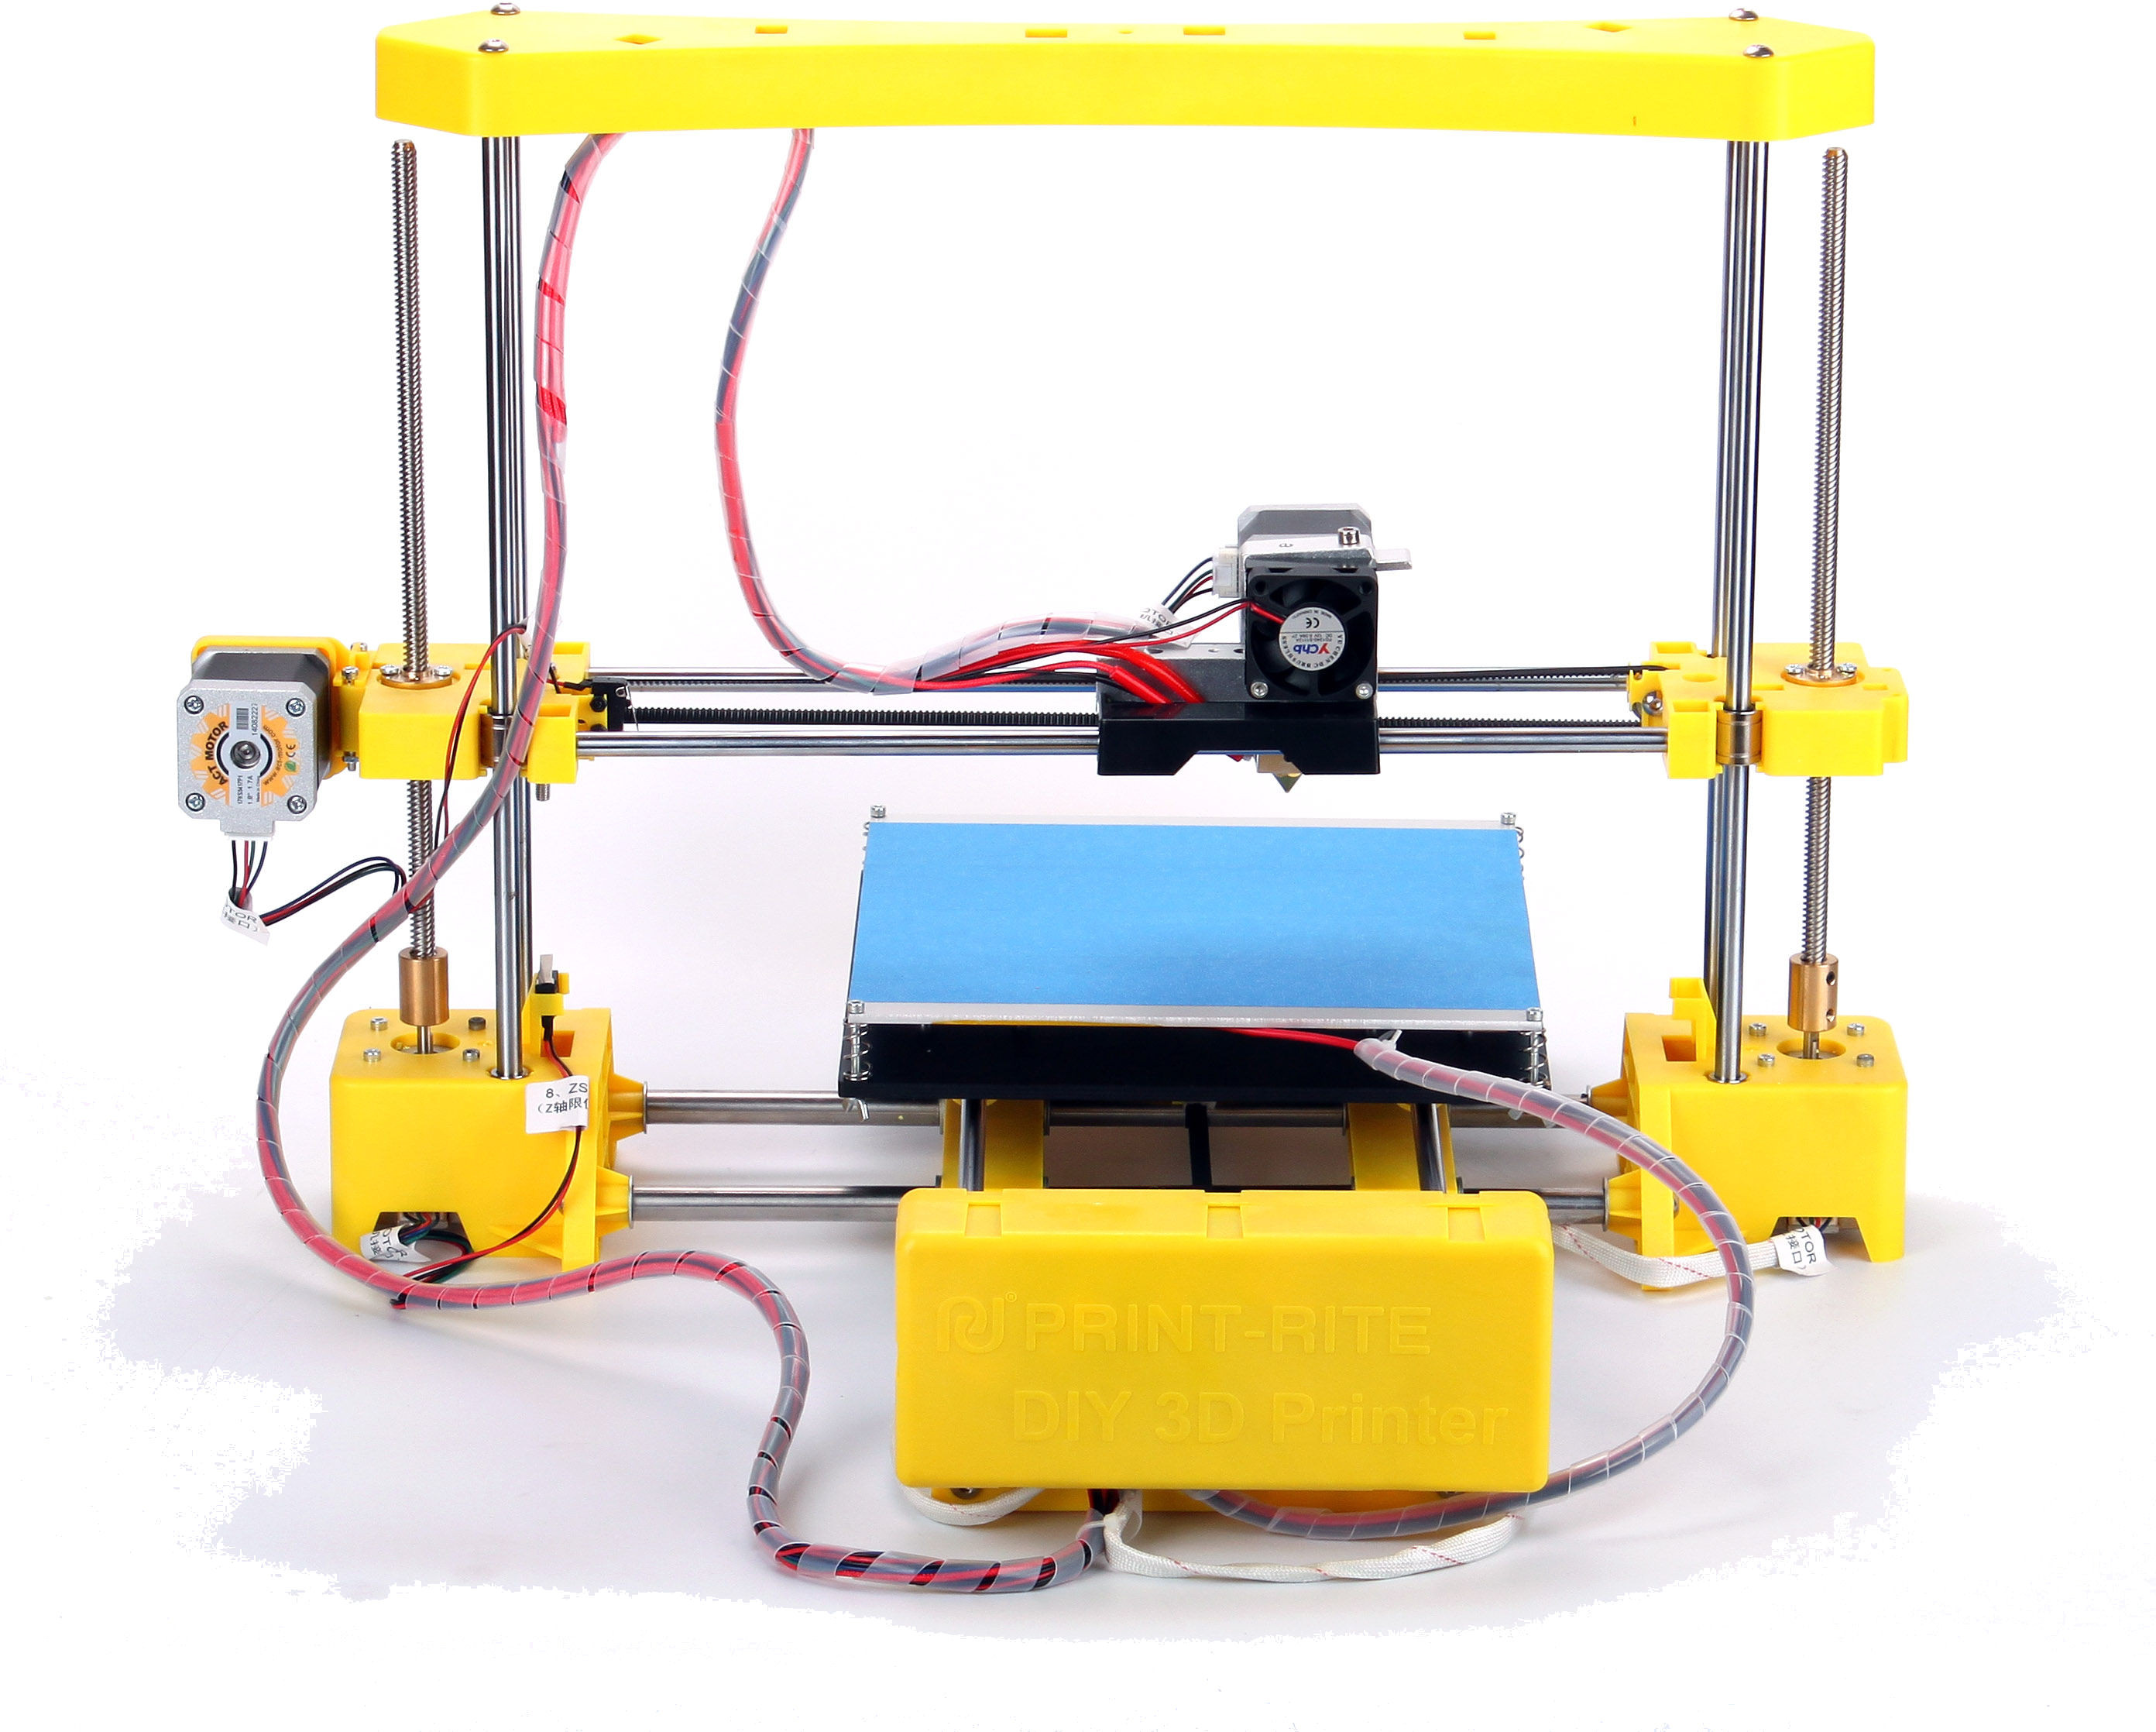 Best ideas about DIY 3D Printer Plans Pdf
. Save or Pin provbackg Blog Now.